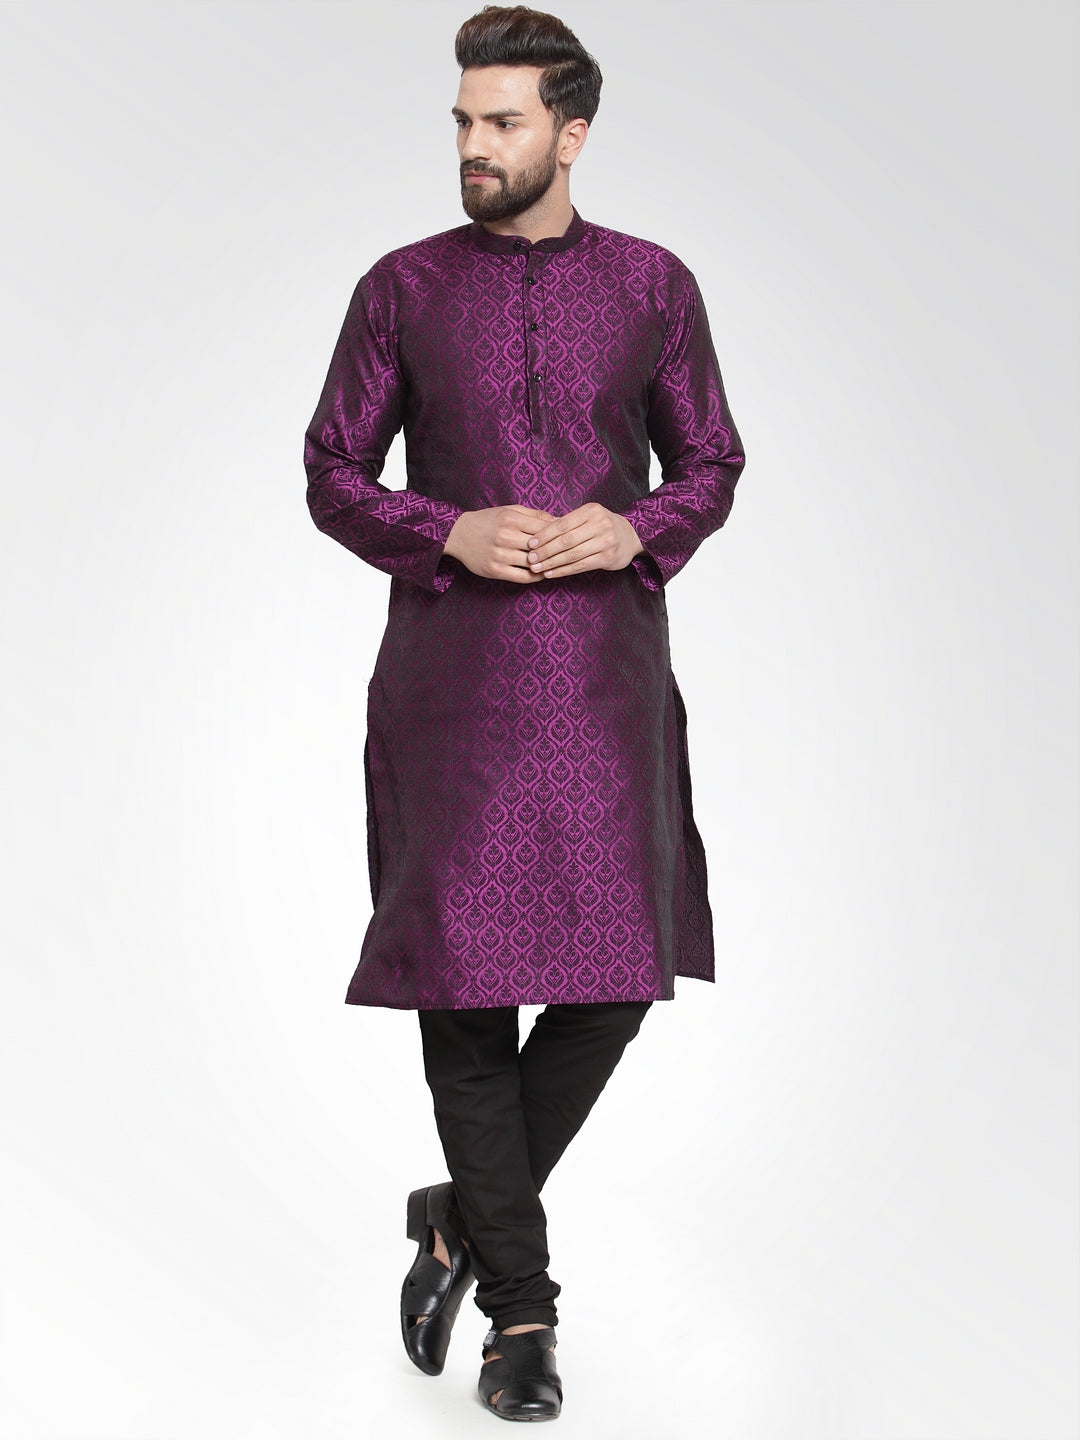 Men Purple-Colored & Black Self Design Kurta with Churidar